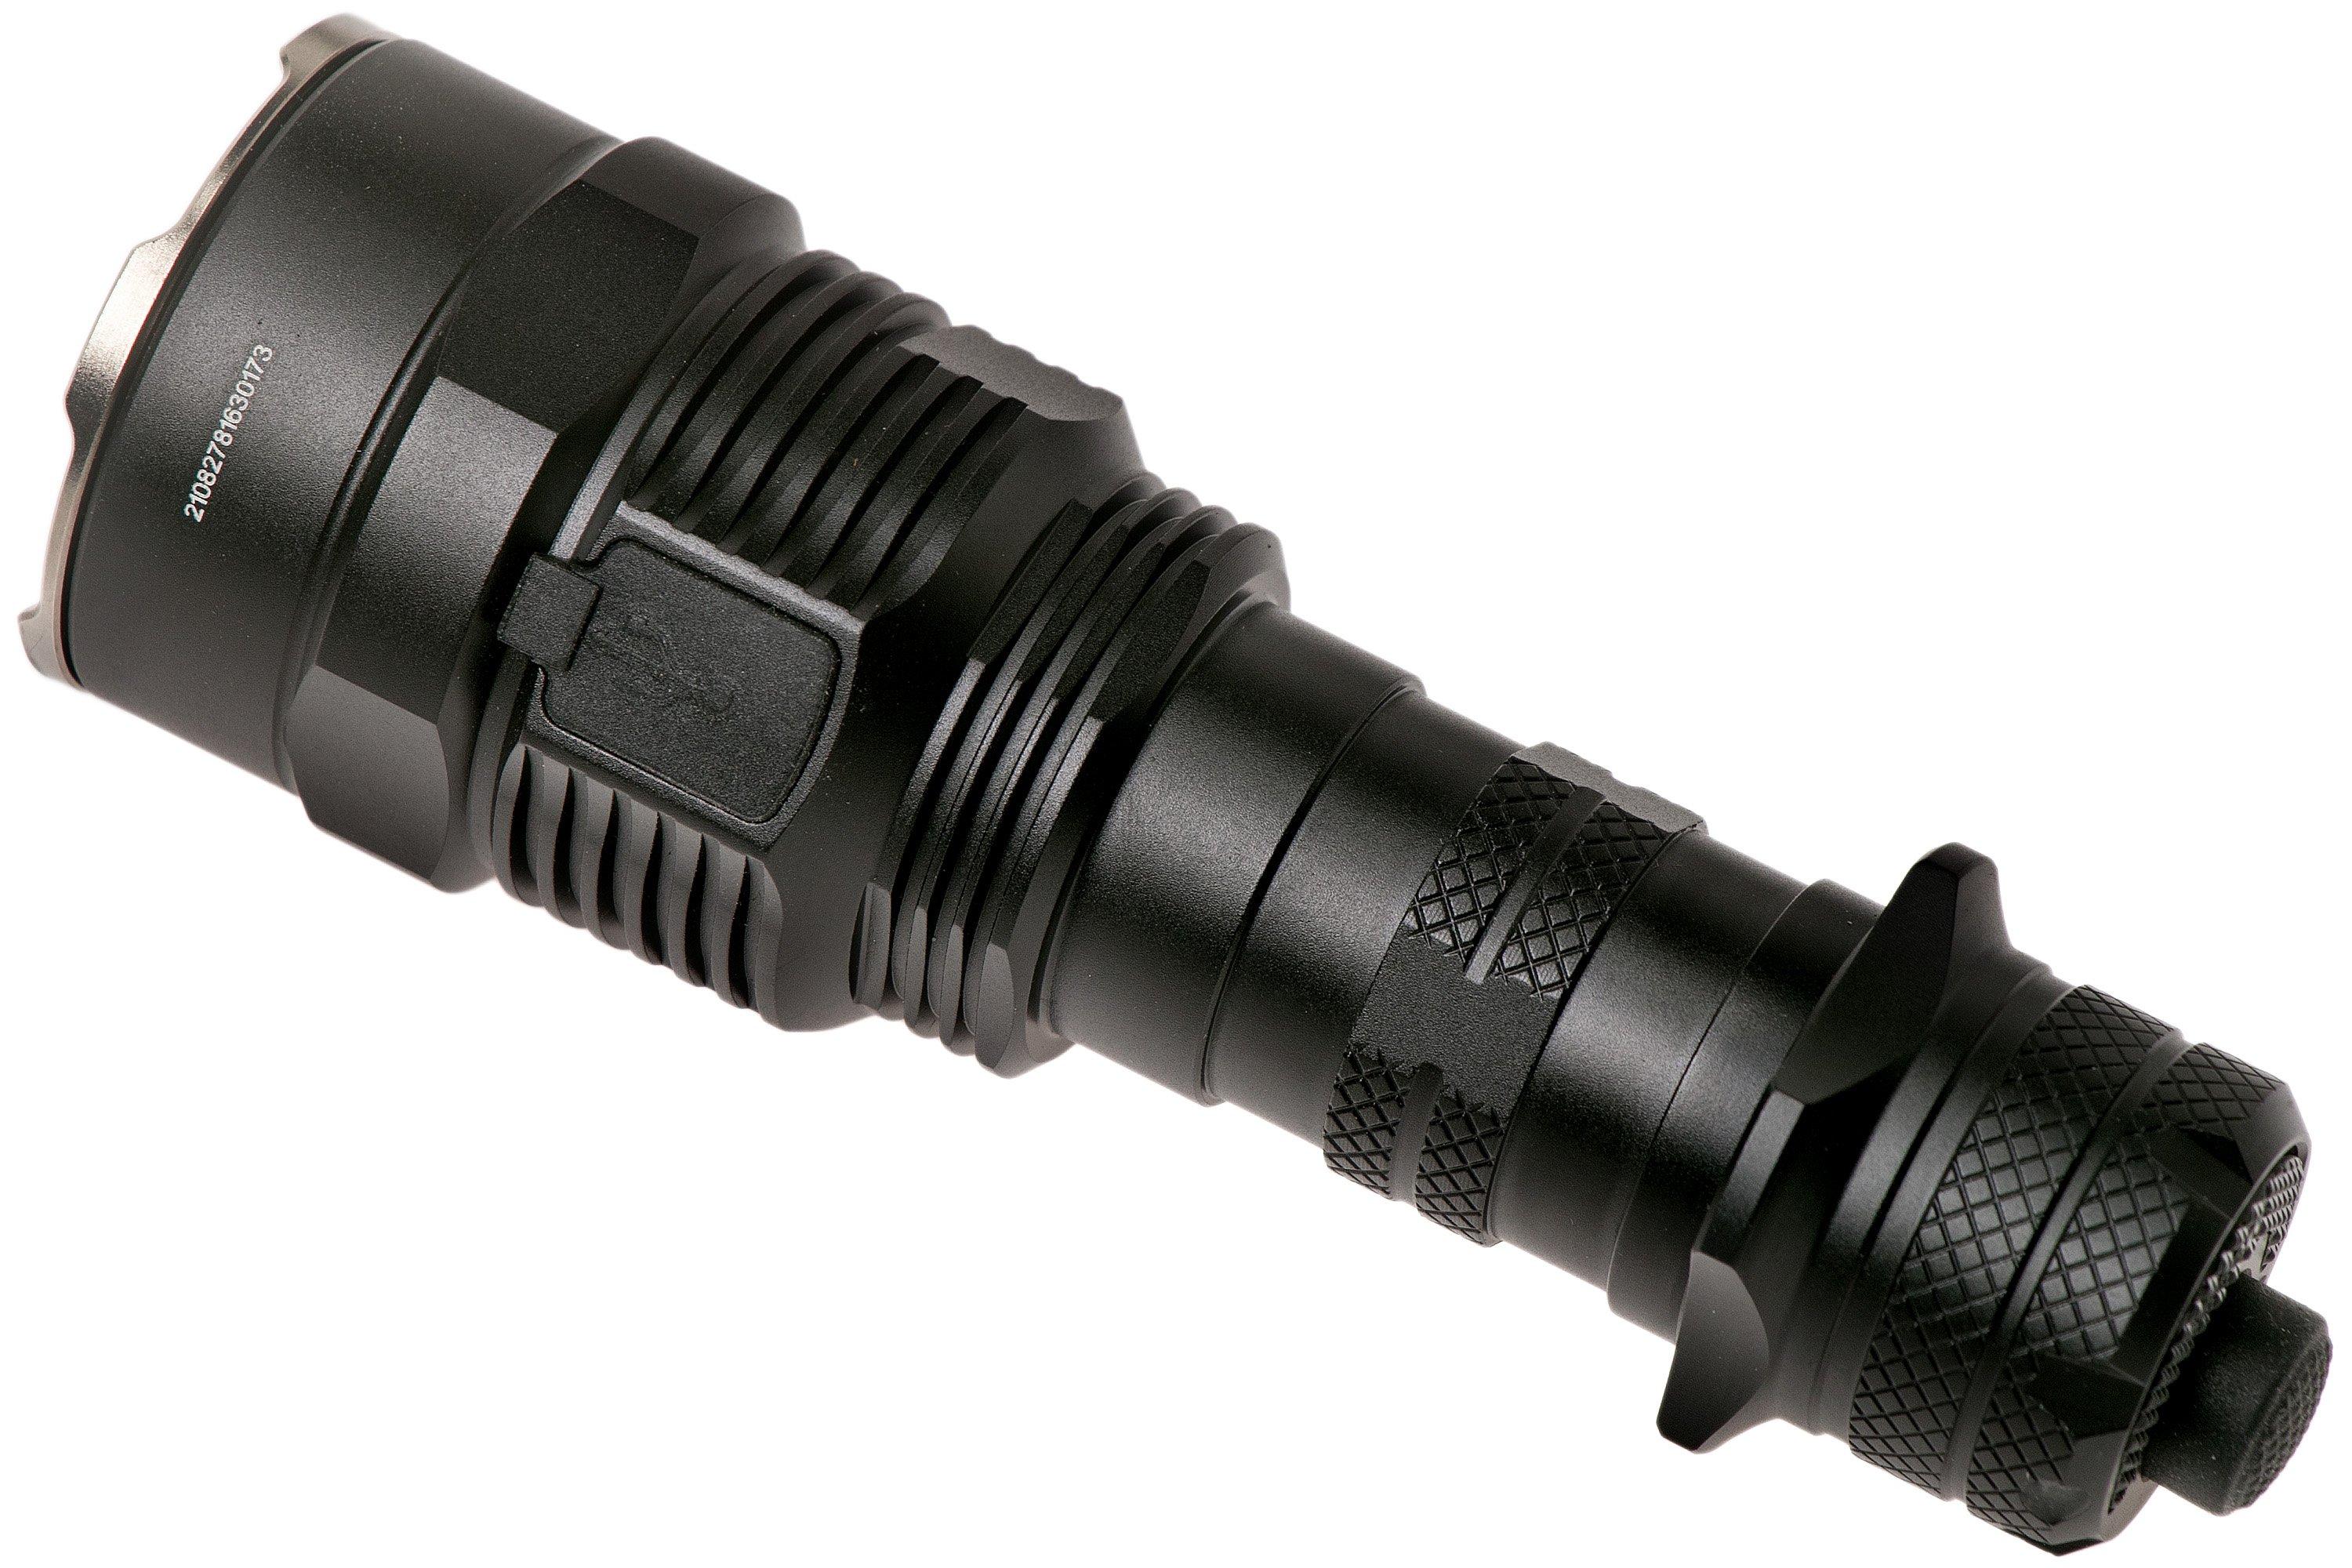  Nitecore TM9K TAC Tactical Flashlight, 9800 Lumen USB